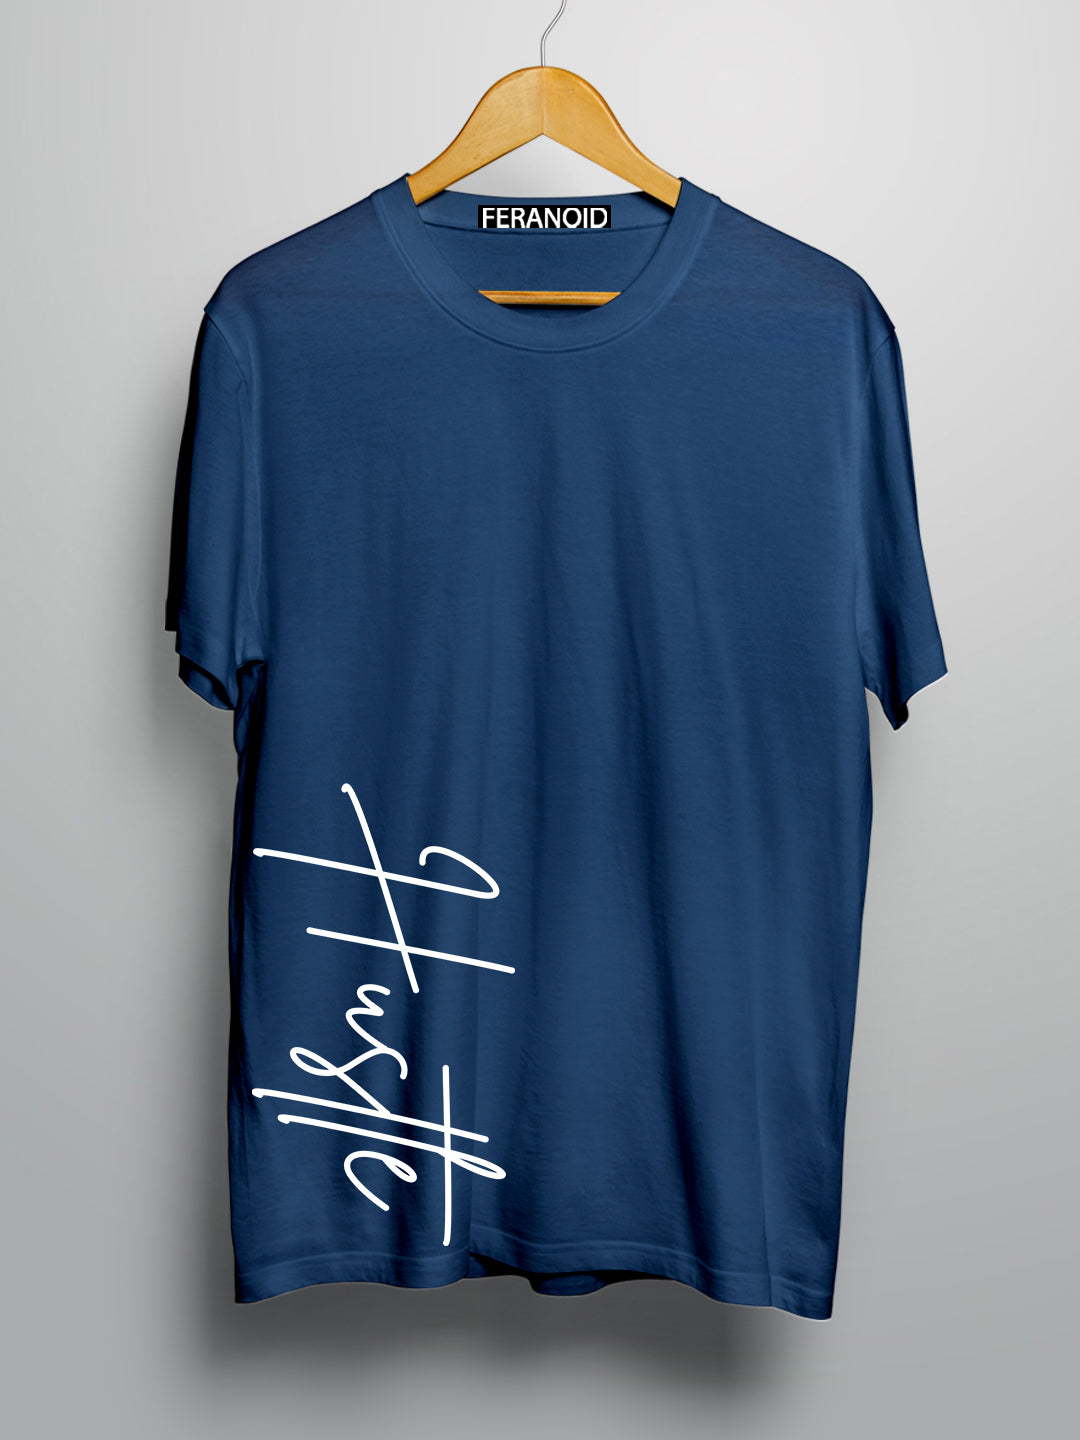 Hustle Teal Blue T-shirt